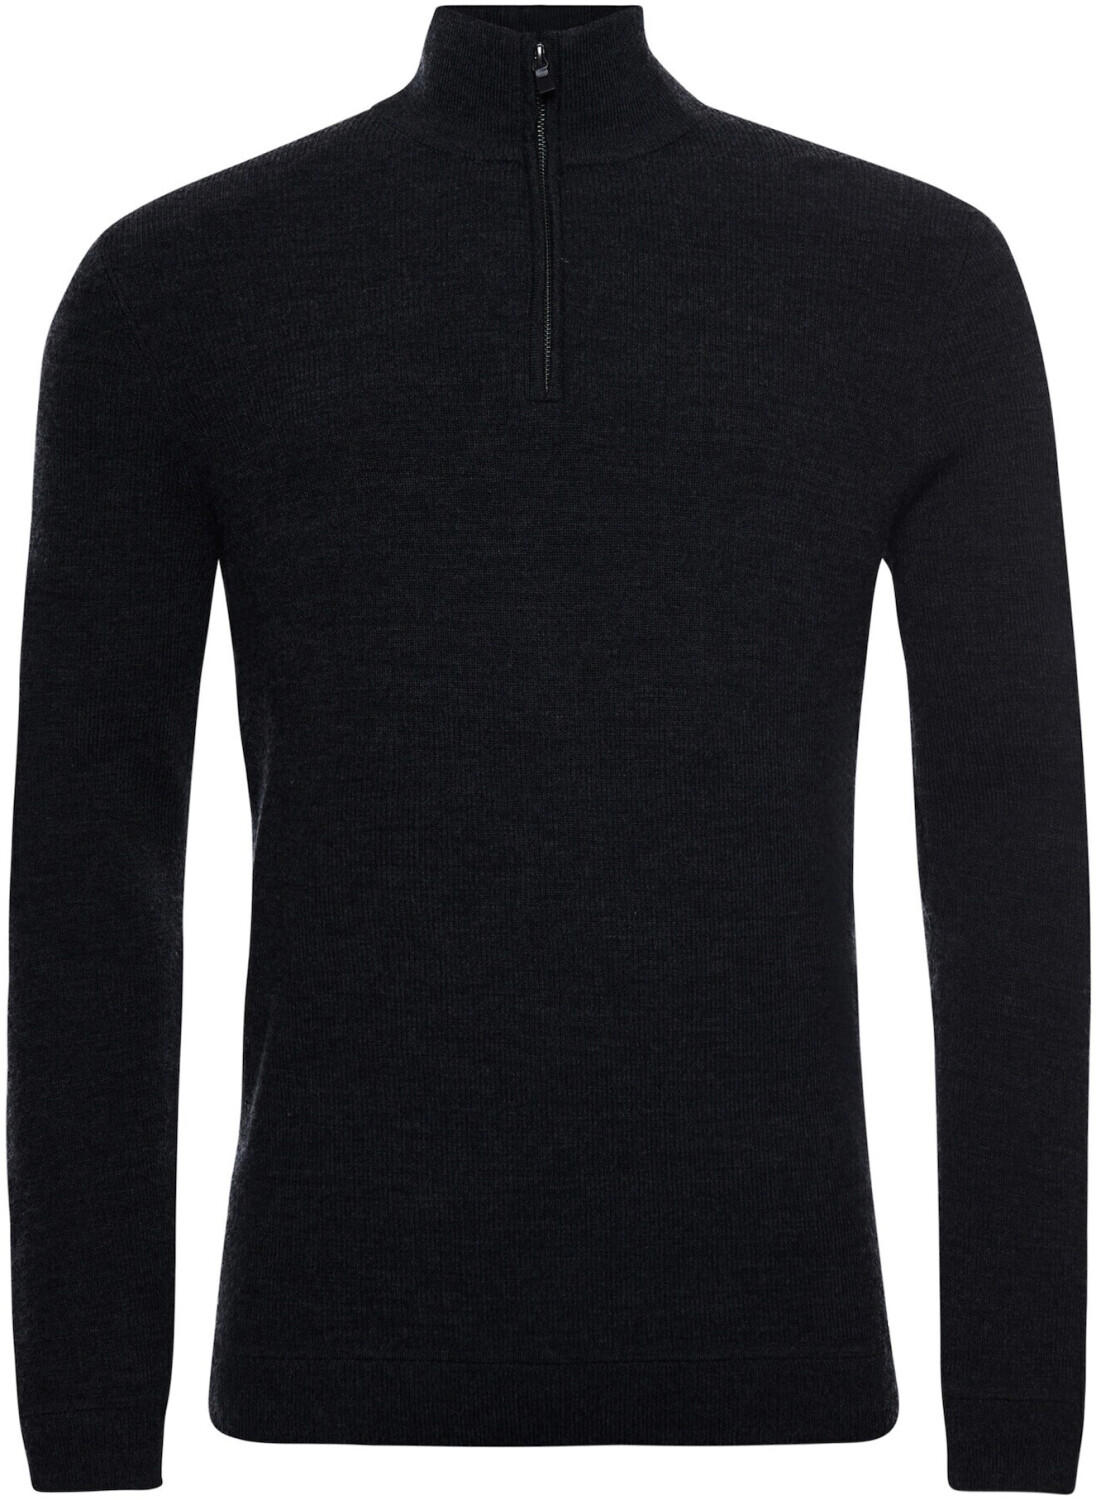 Superdry Studios Merino Sweater black (M6110437A-HEB)